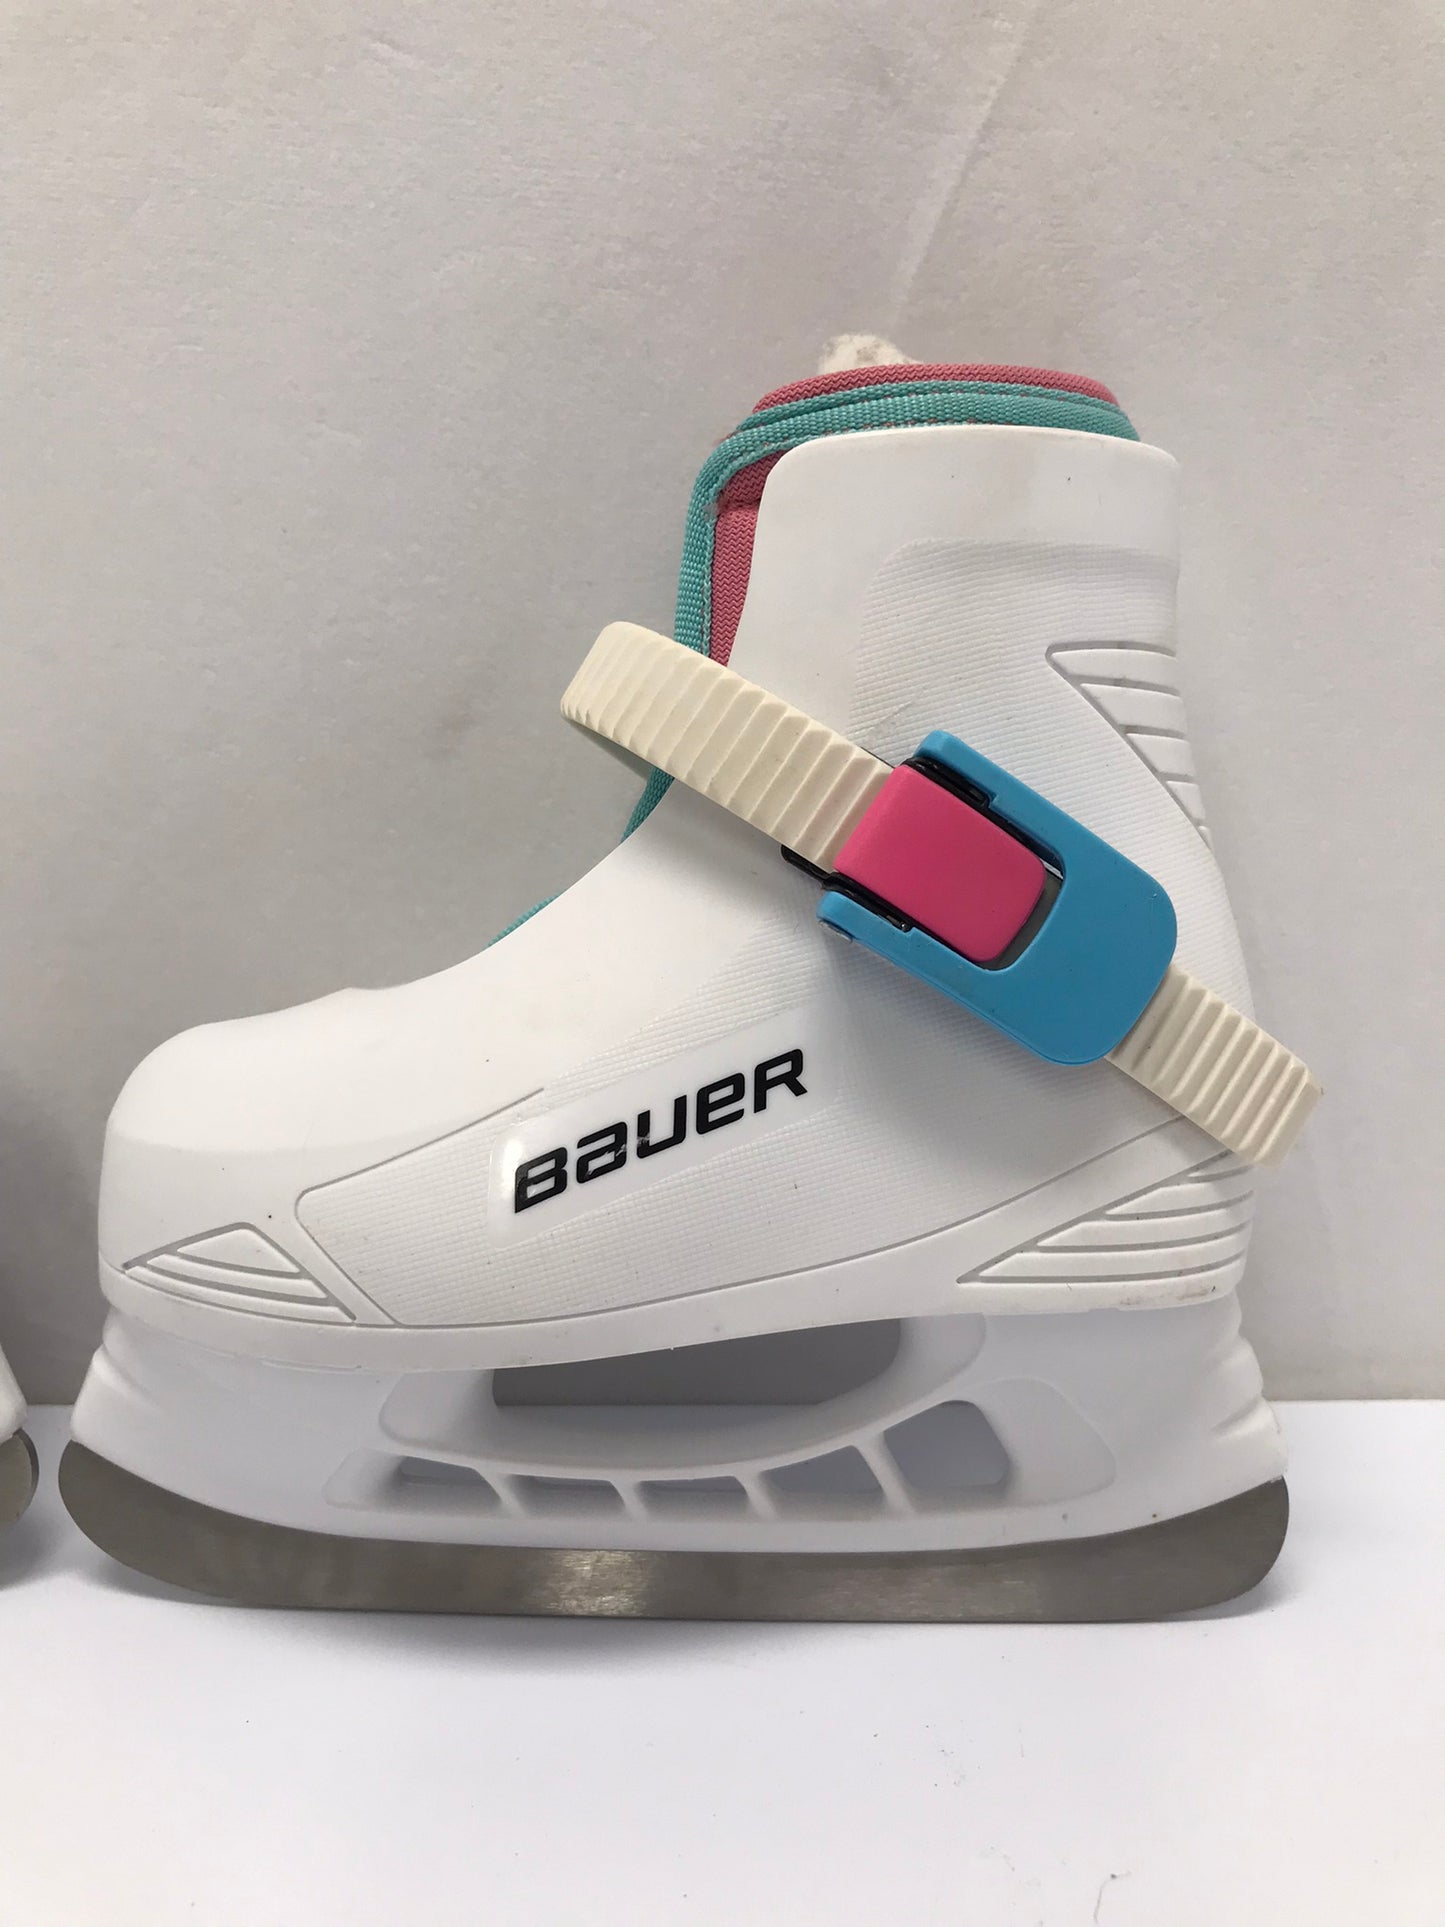 Ice Skates Child size 6-7 Toddler Bauer Plastic Adjustable Size White Pink